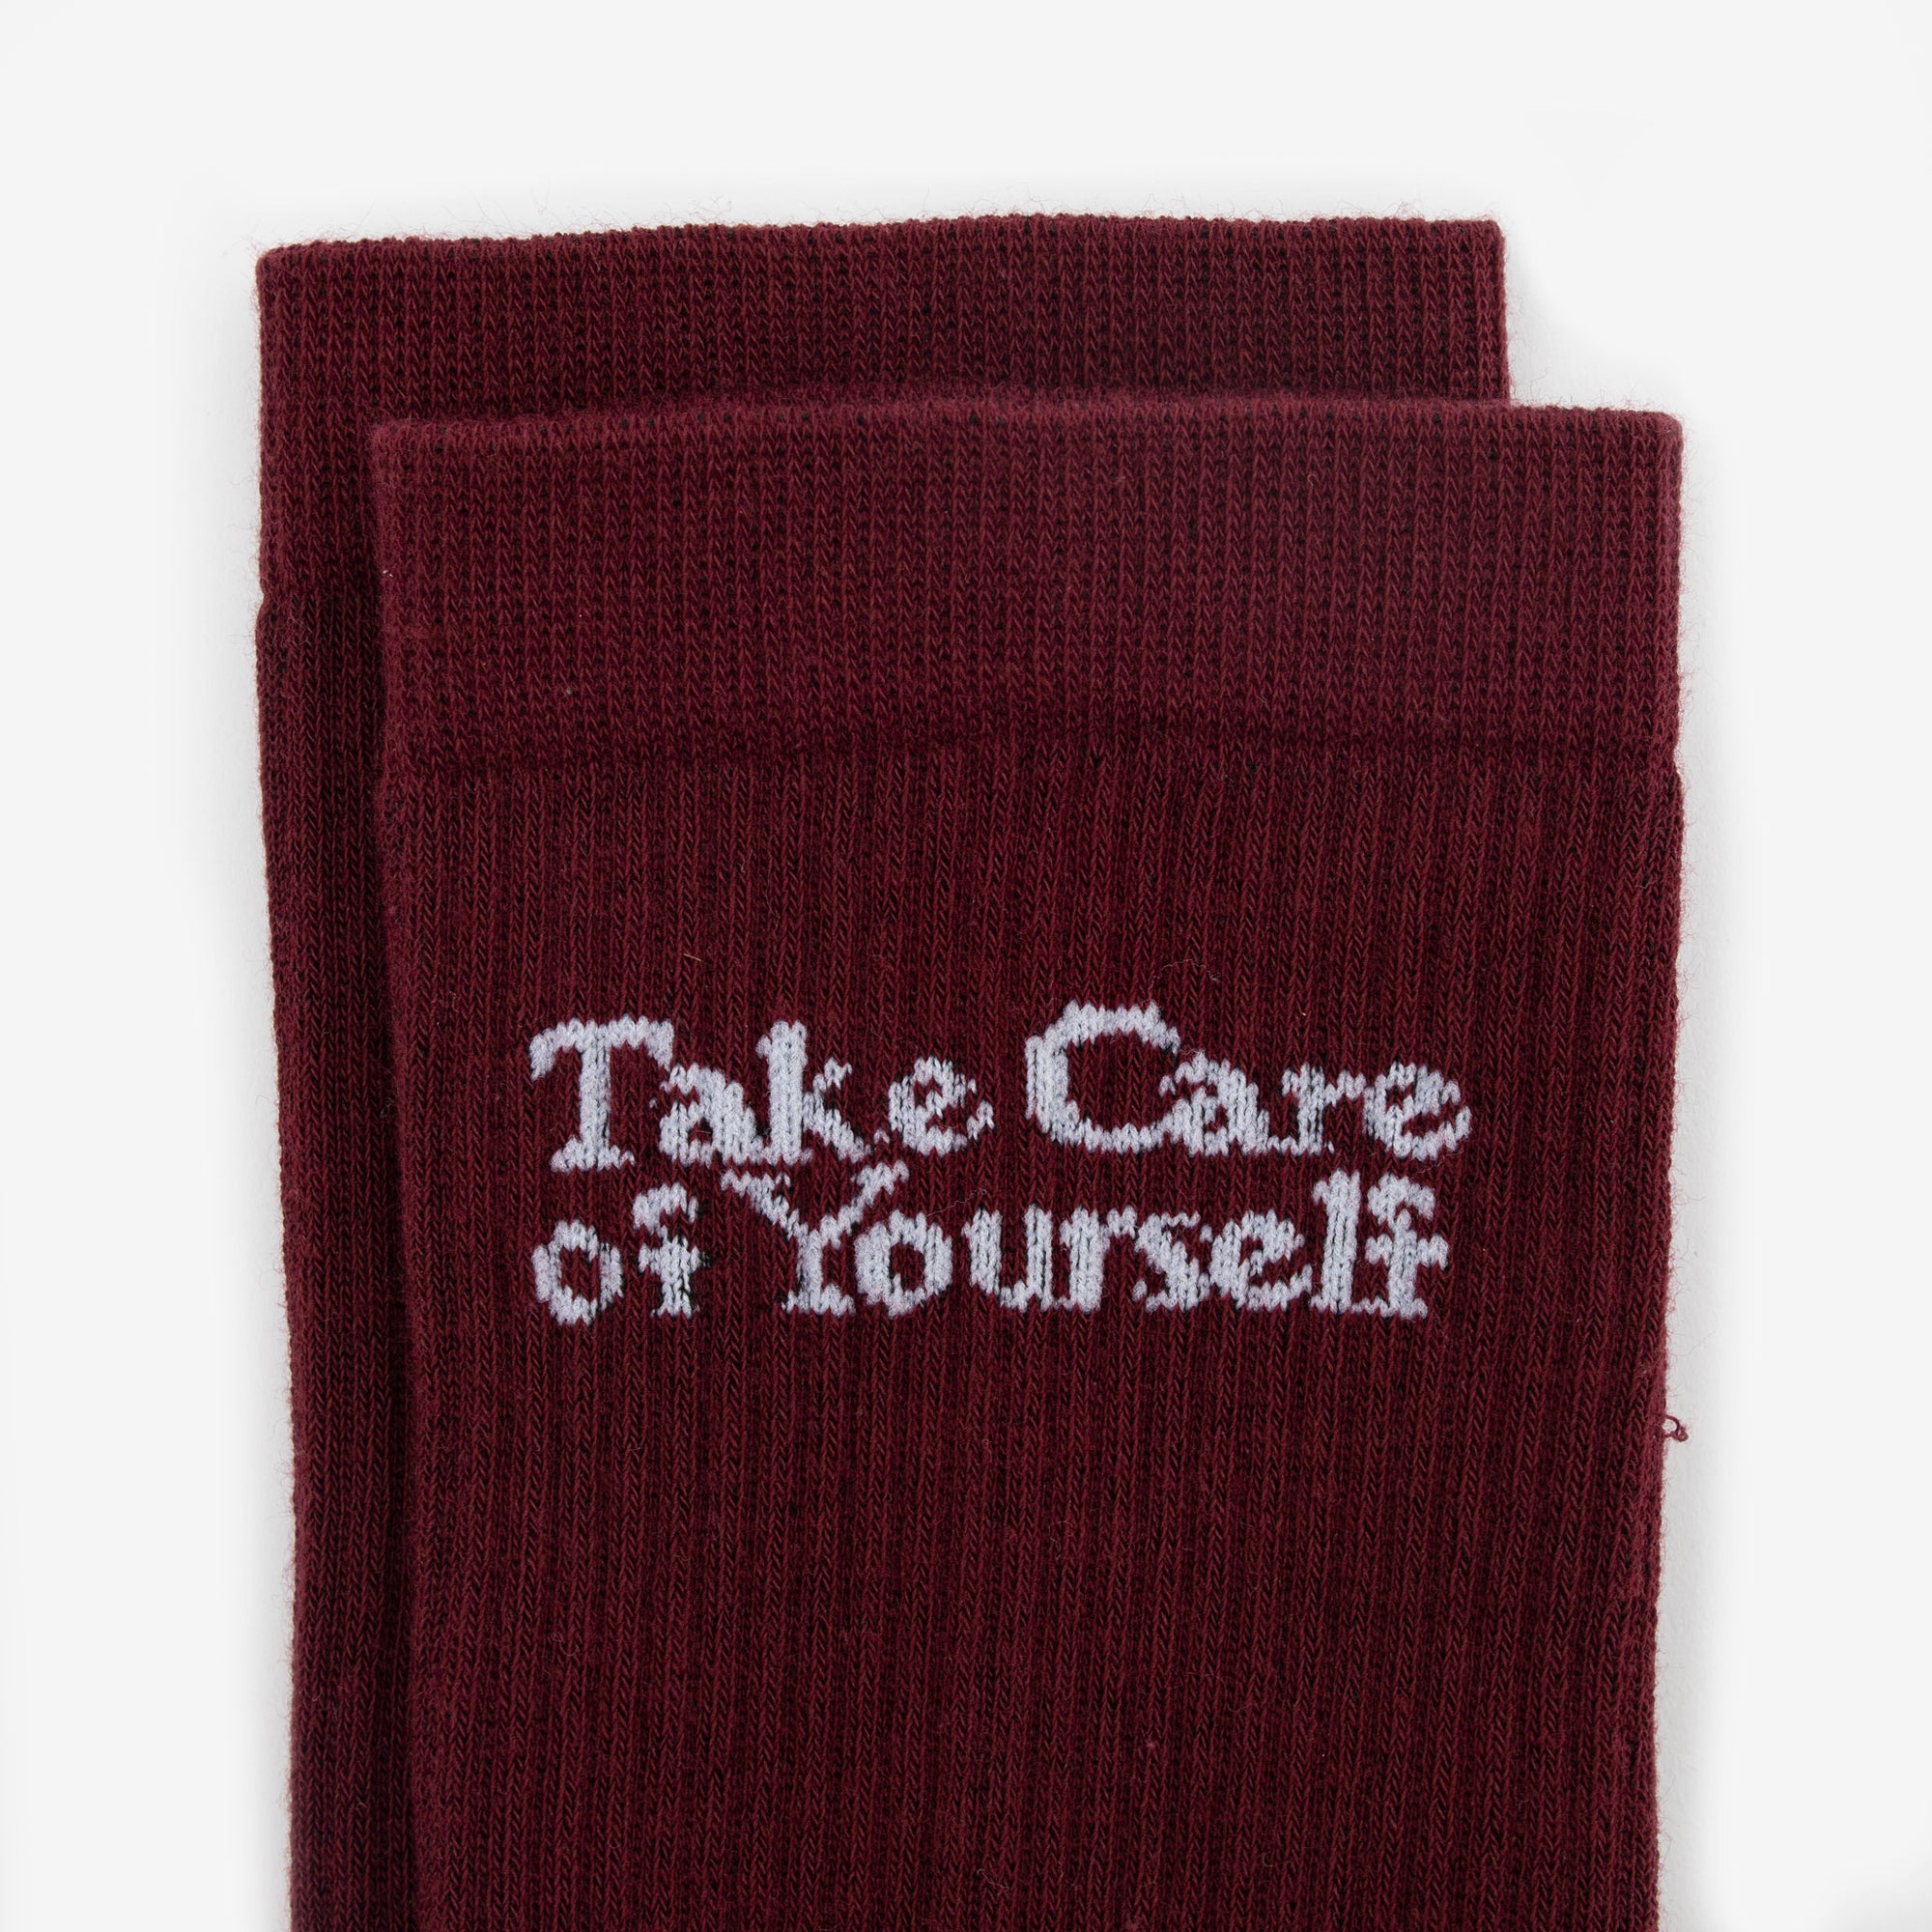 The Take Care Crew Sock in Oxblood